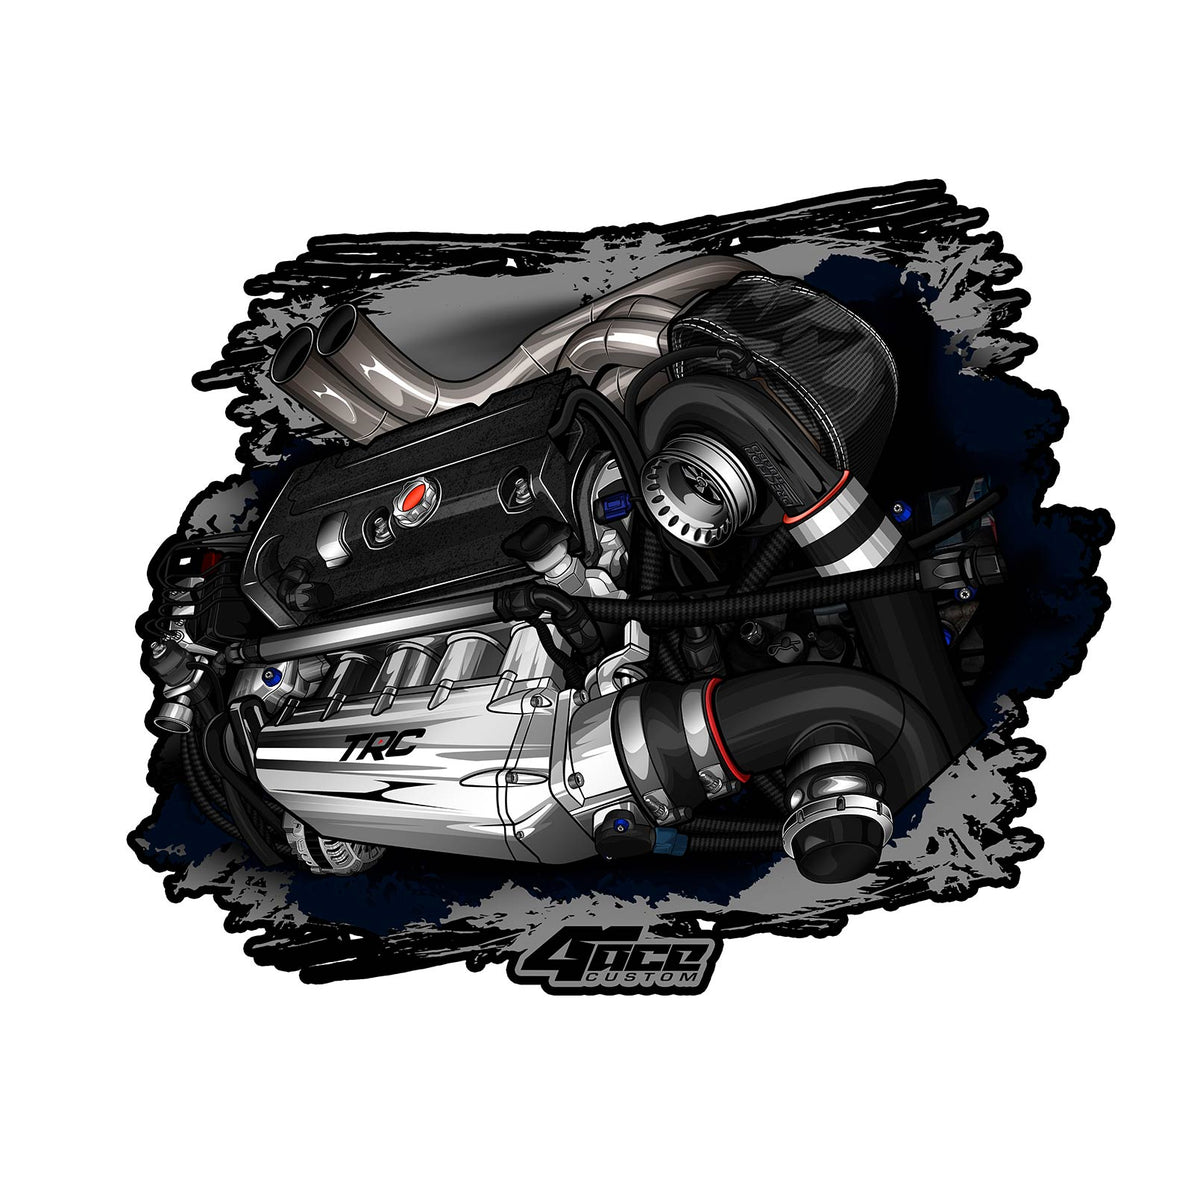 TRC Honda K24 Destroker Engine Sticker (SOLD OUT)